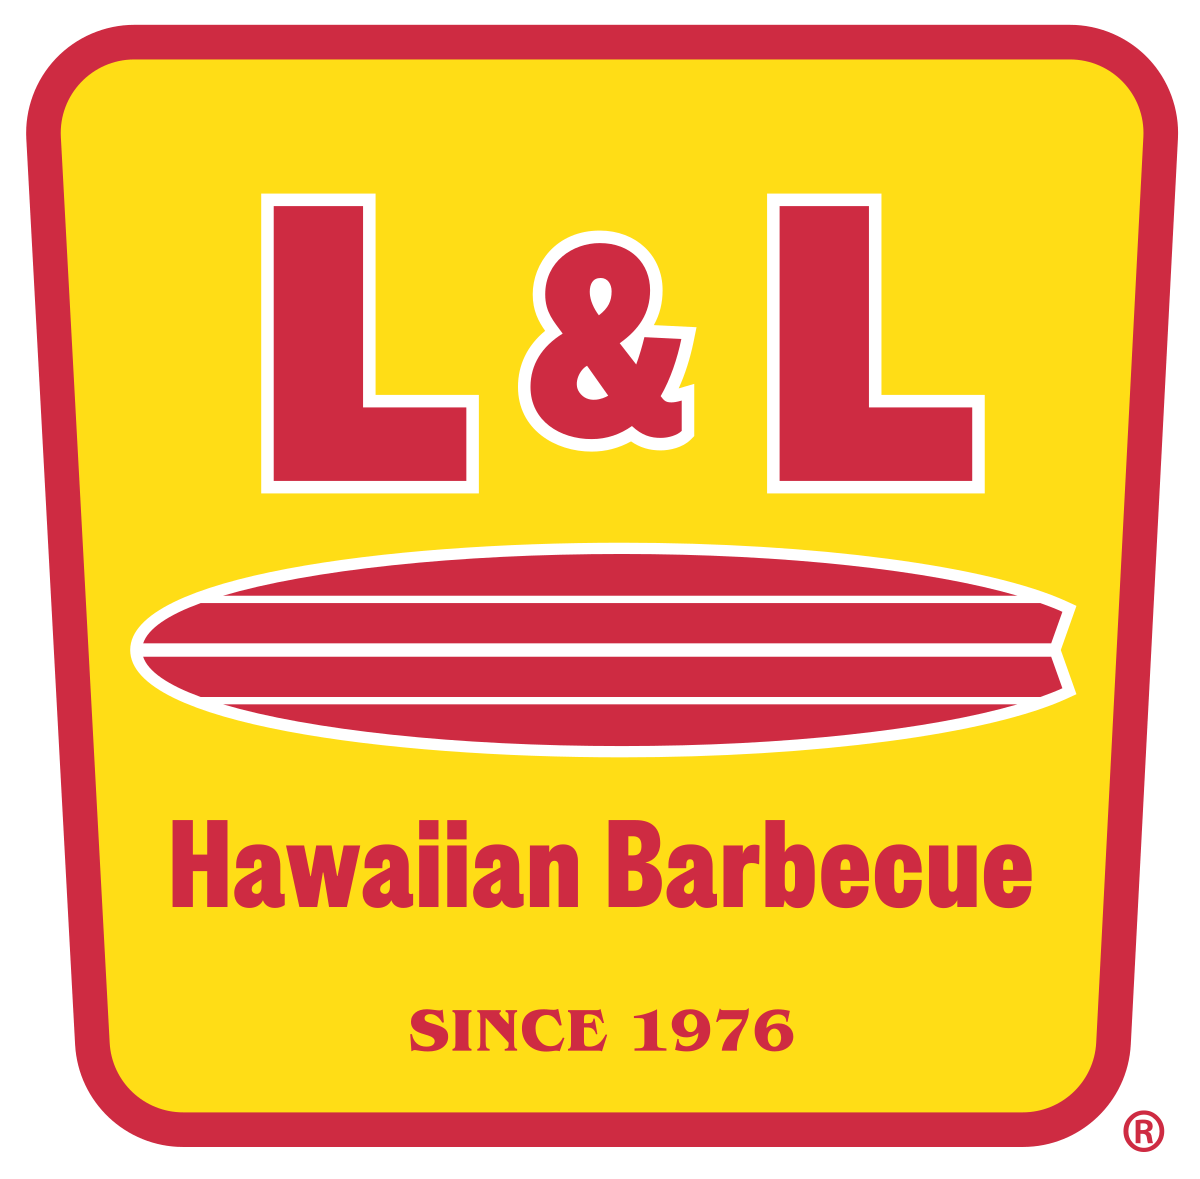 Red White Green Flag Restaurant Logo - L&L Hawaiian Barbecue